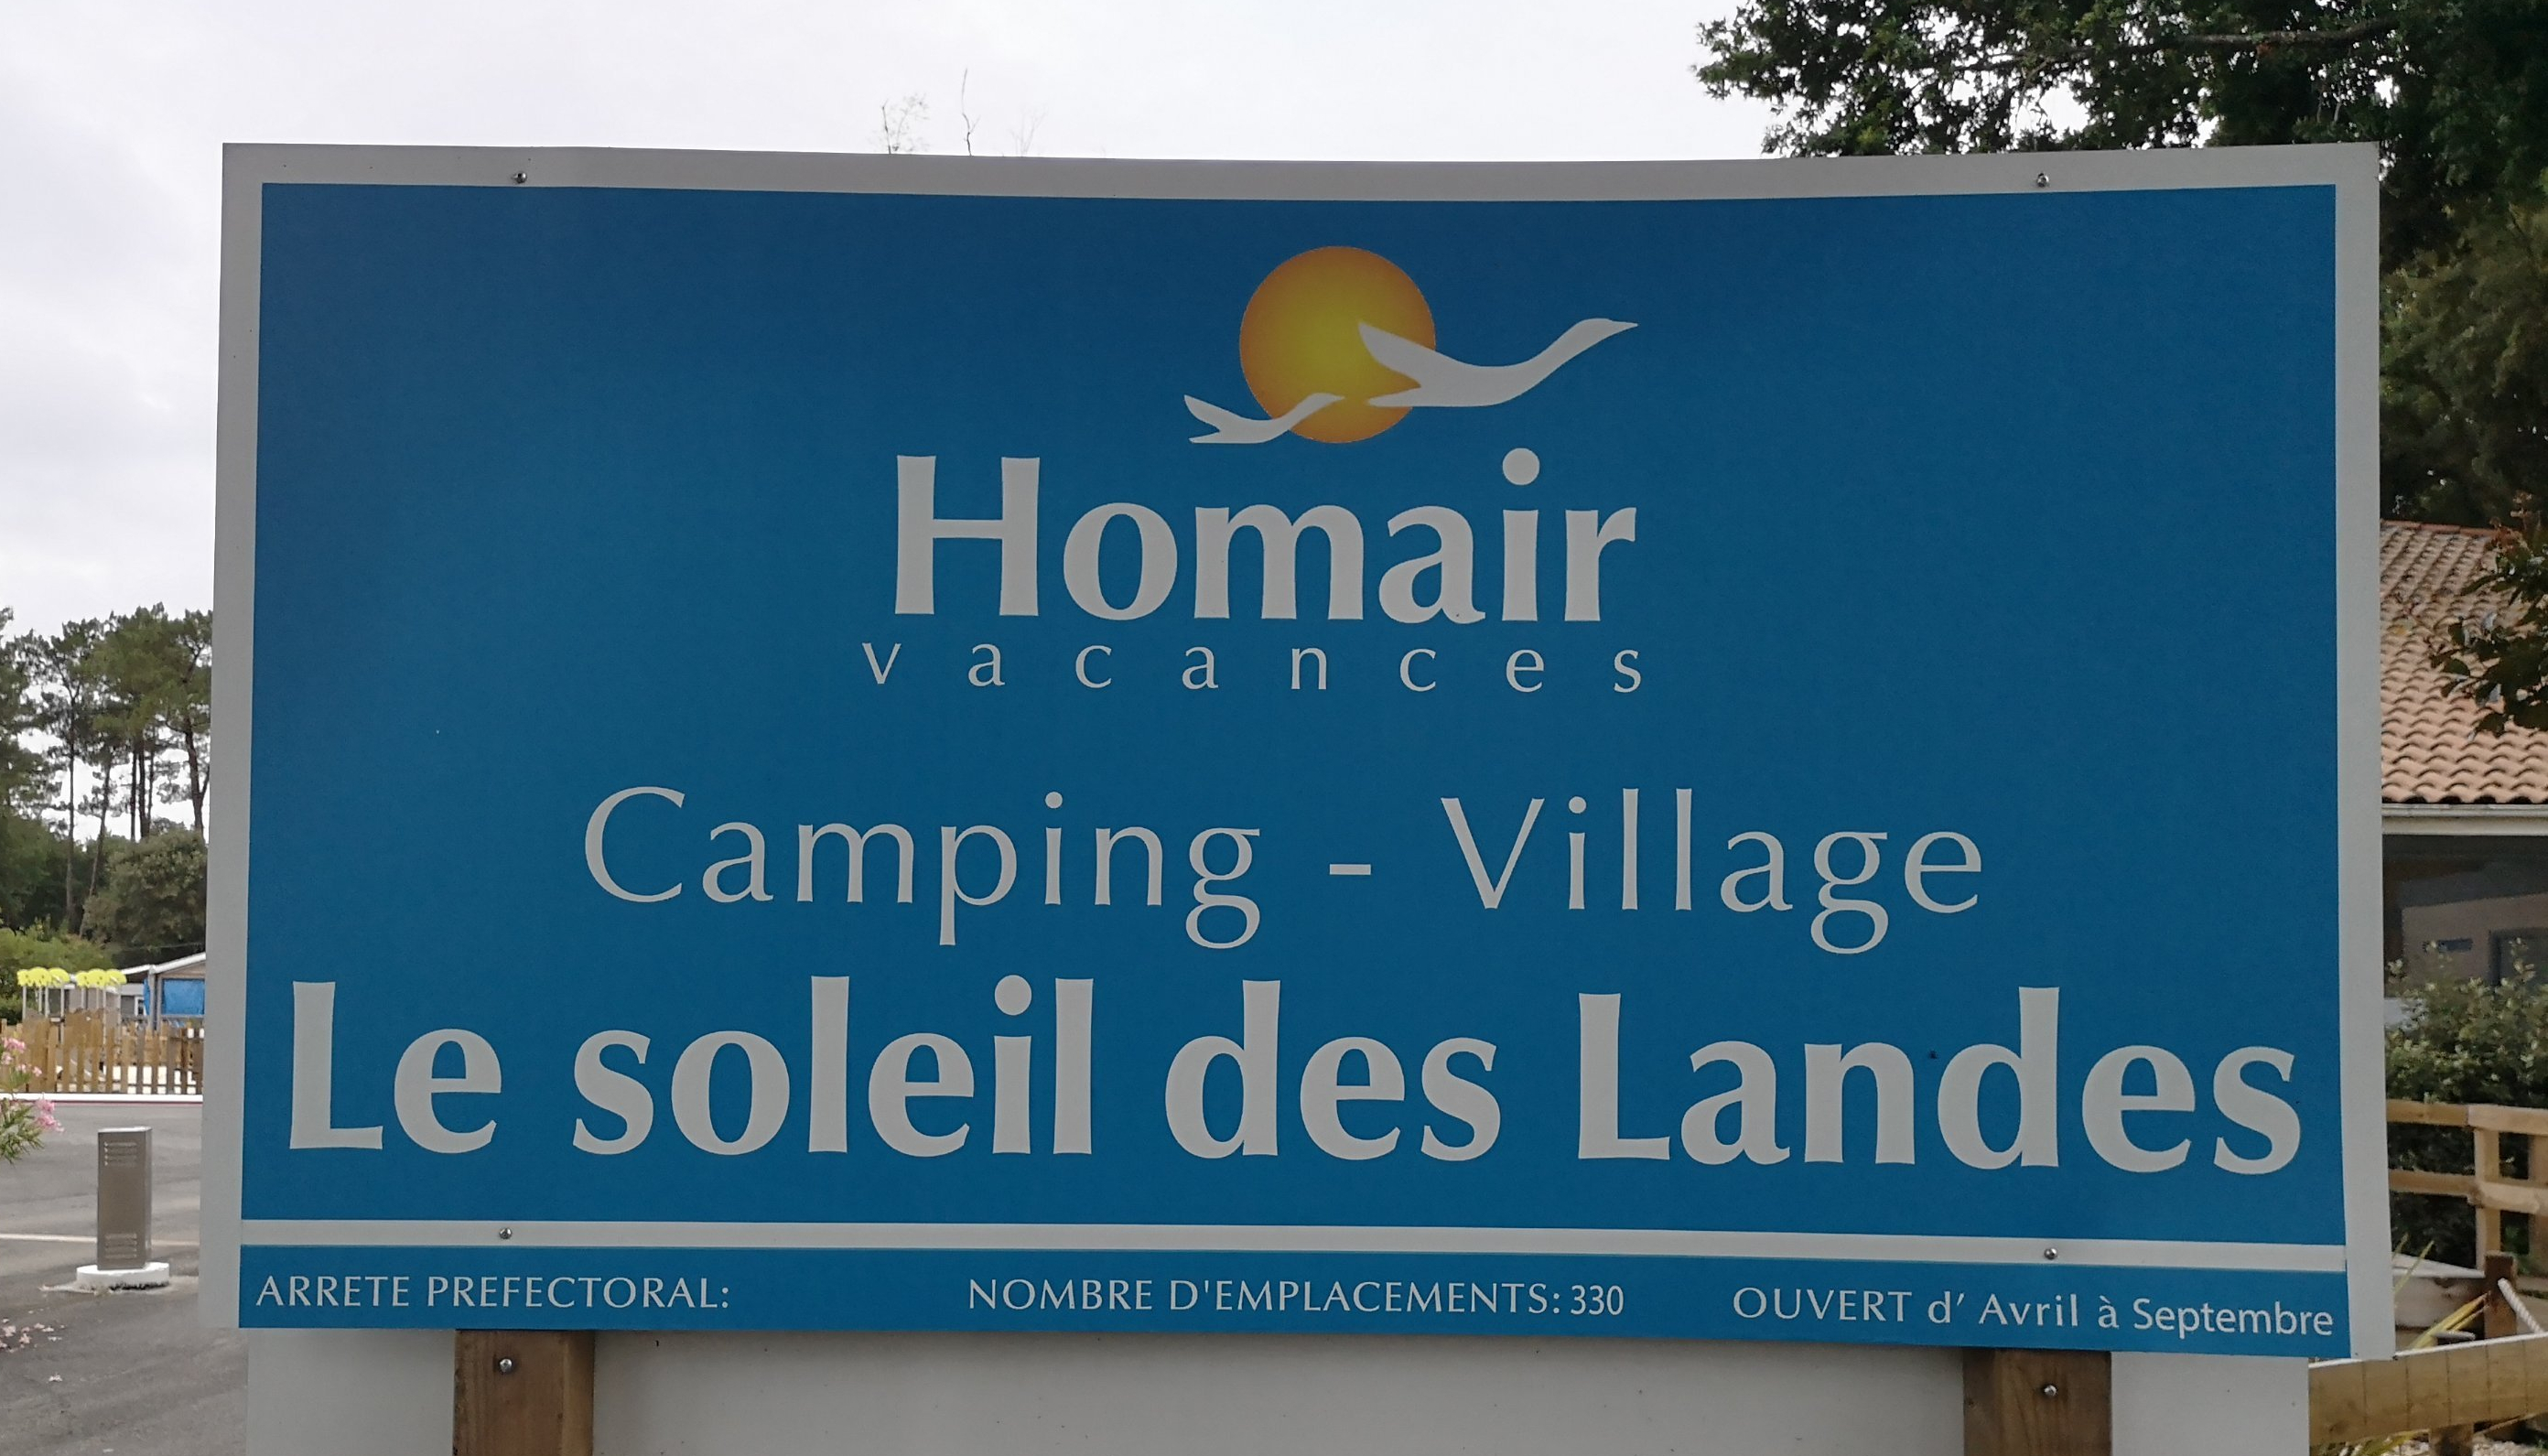 Camping Homair Le soleil des landes